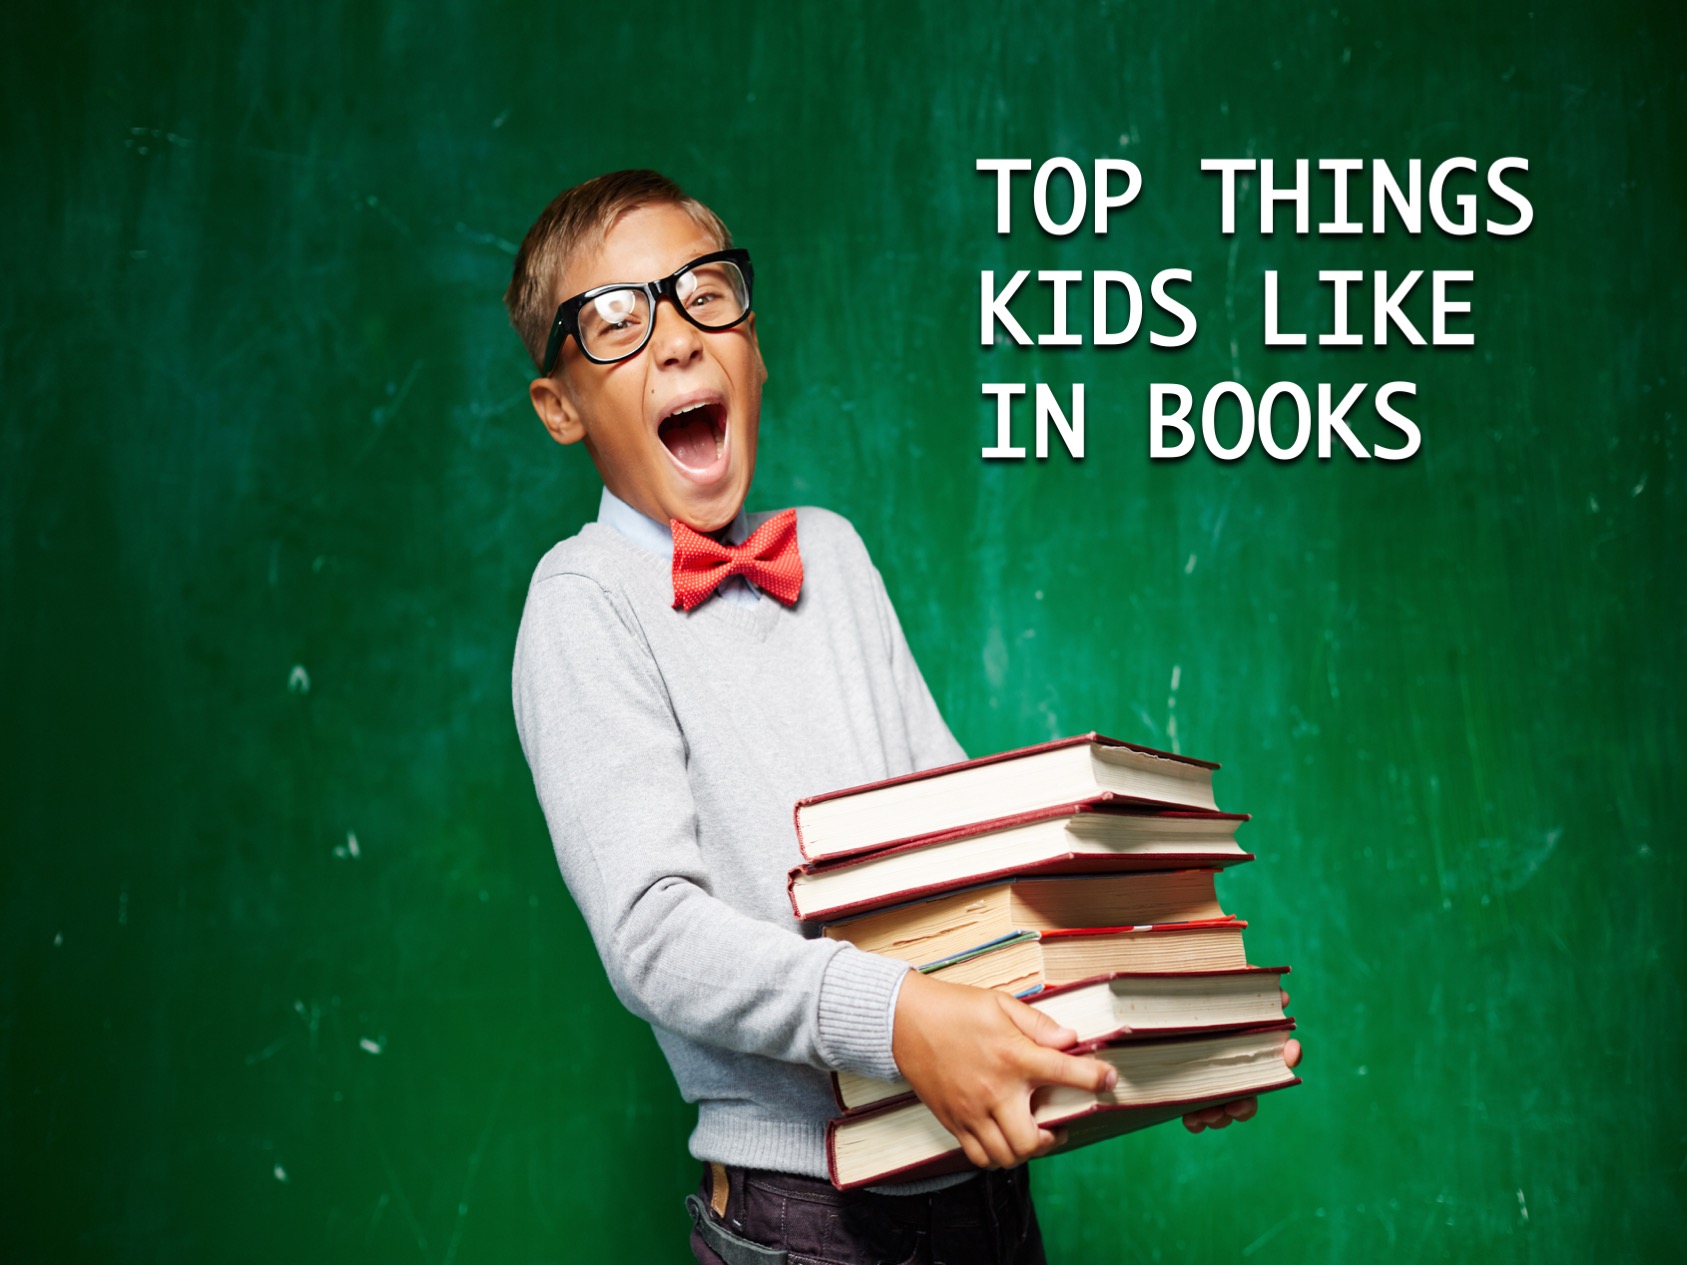 Take book you like. Book Kids like. Popular things. Popular Kids books in us. I like book for Kids.